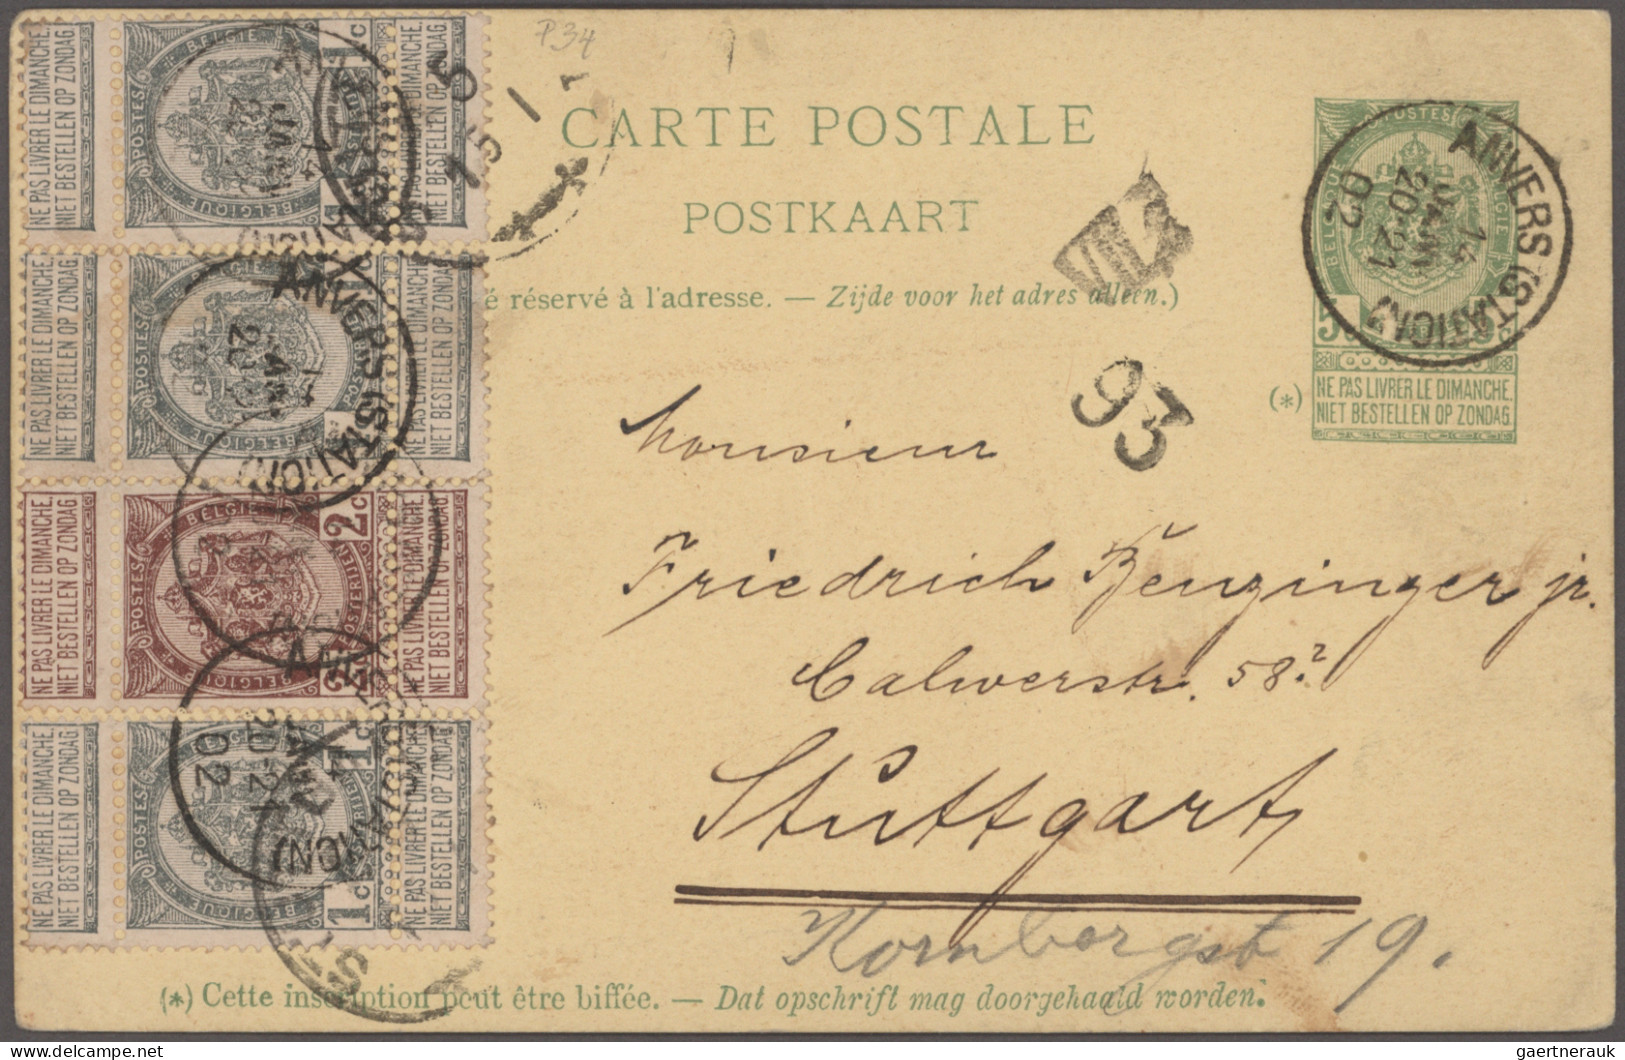 Belgium - postal stationery: 1871/1957, balance of apprx. 254 used/unused statio